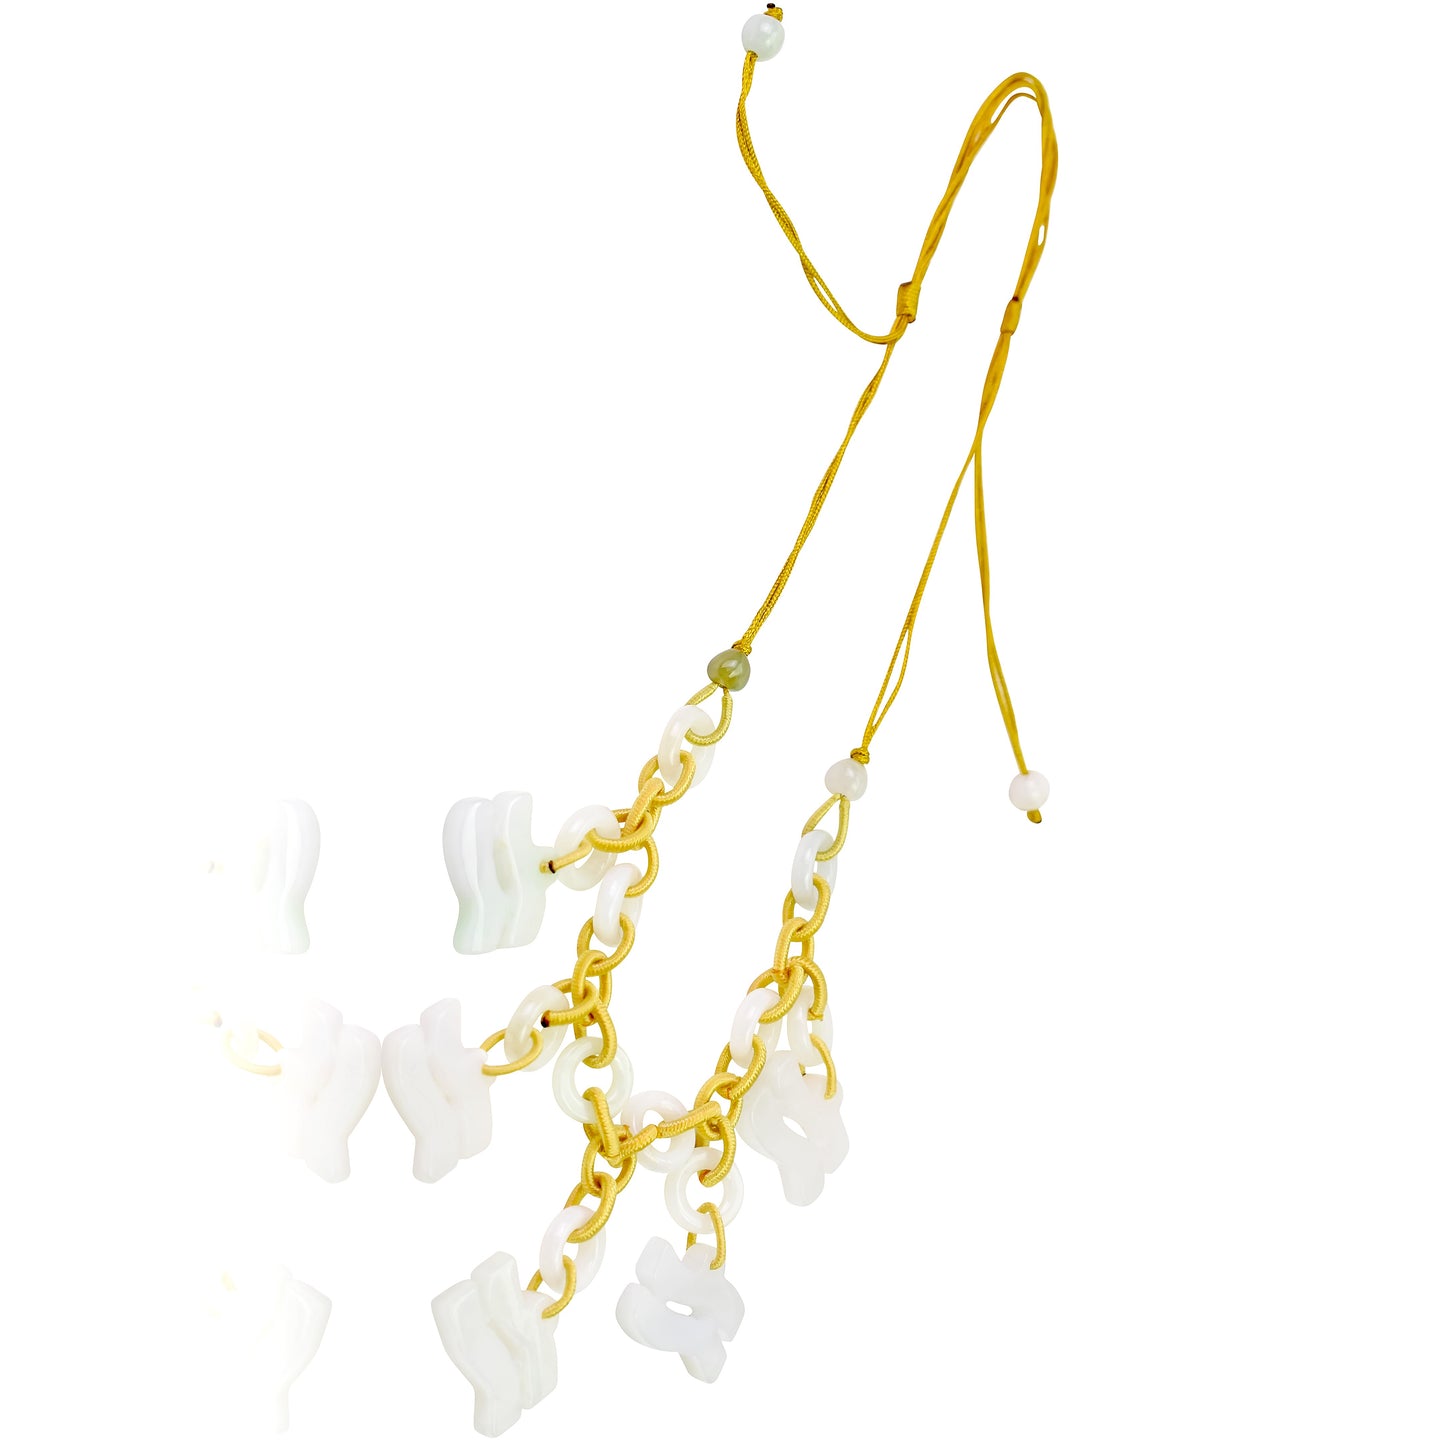 Aquarius Astrology Handmade Jade Necklace Pendant with Yellow Cord